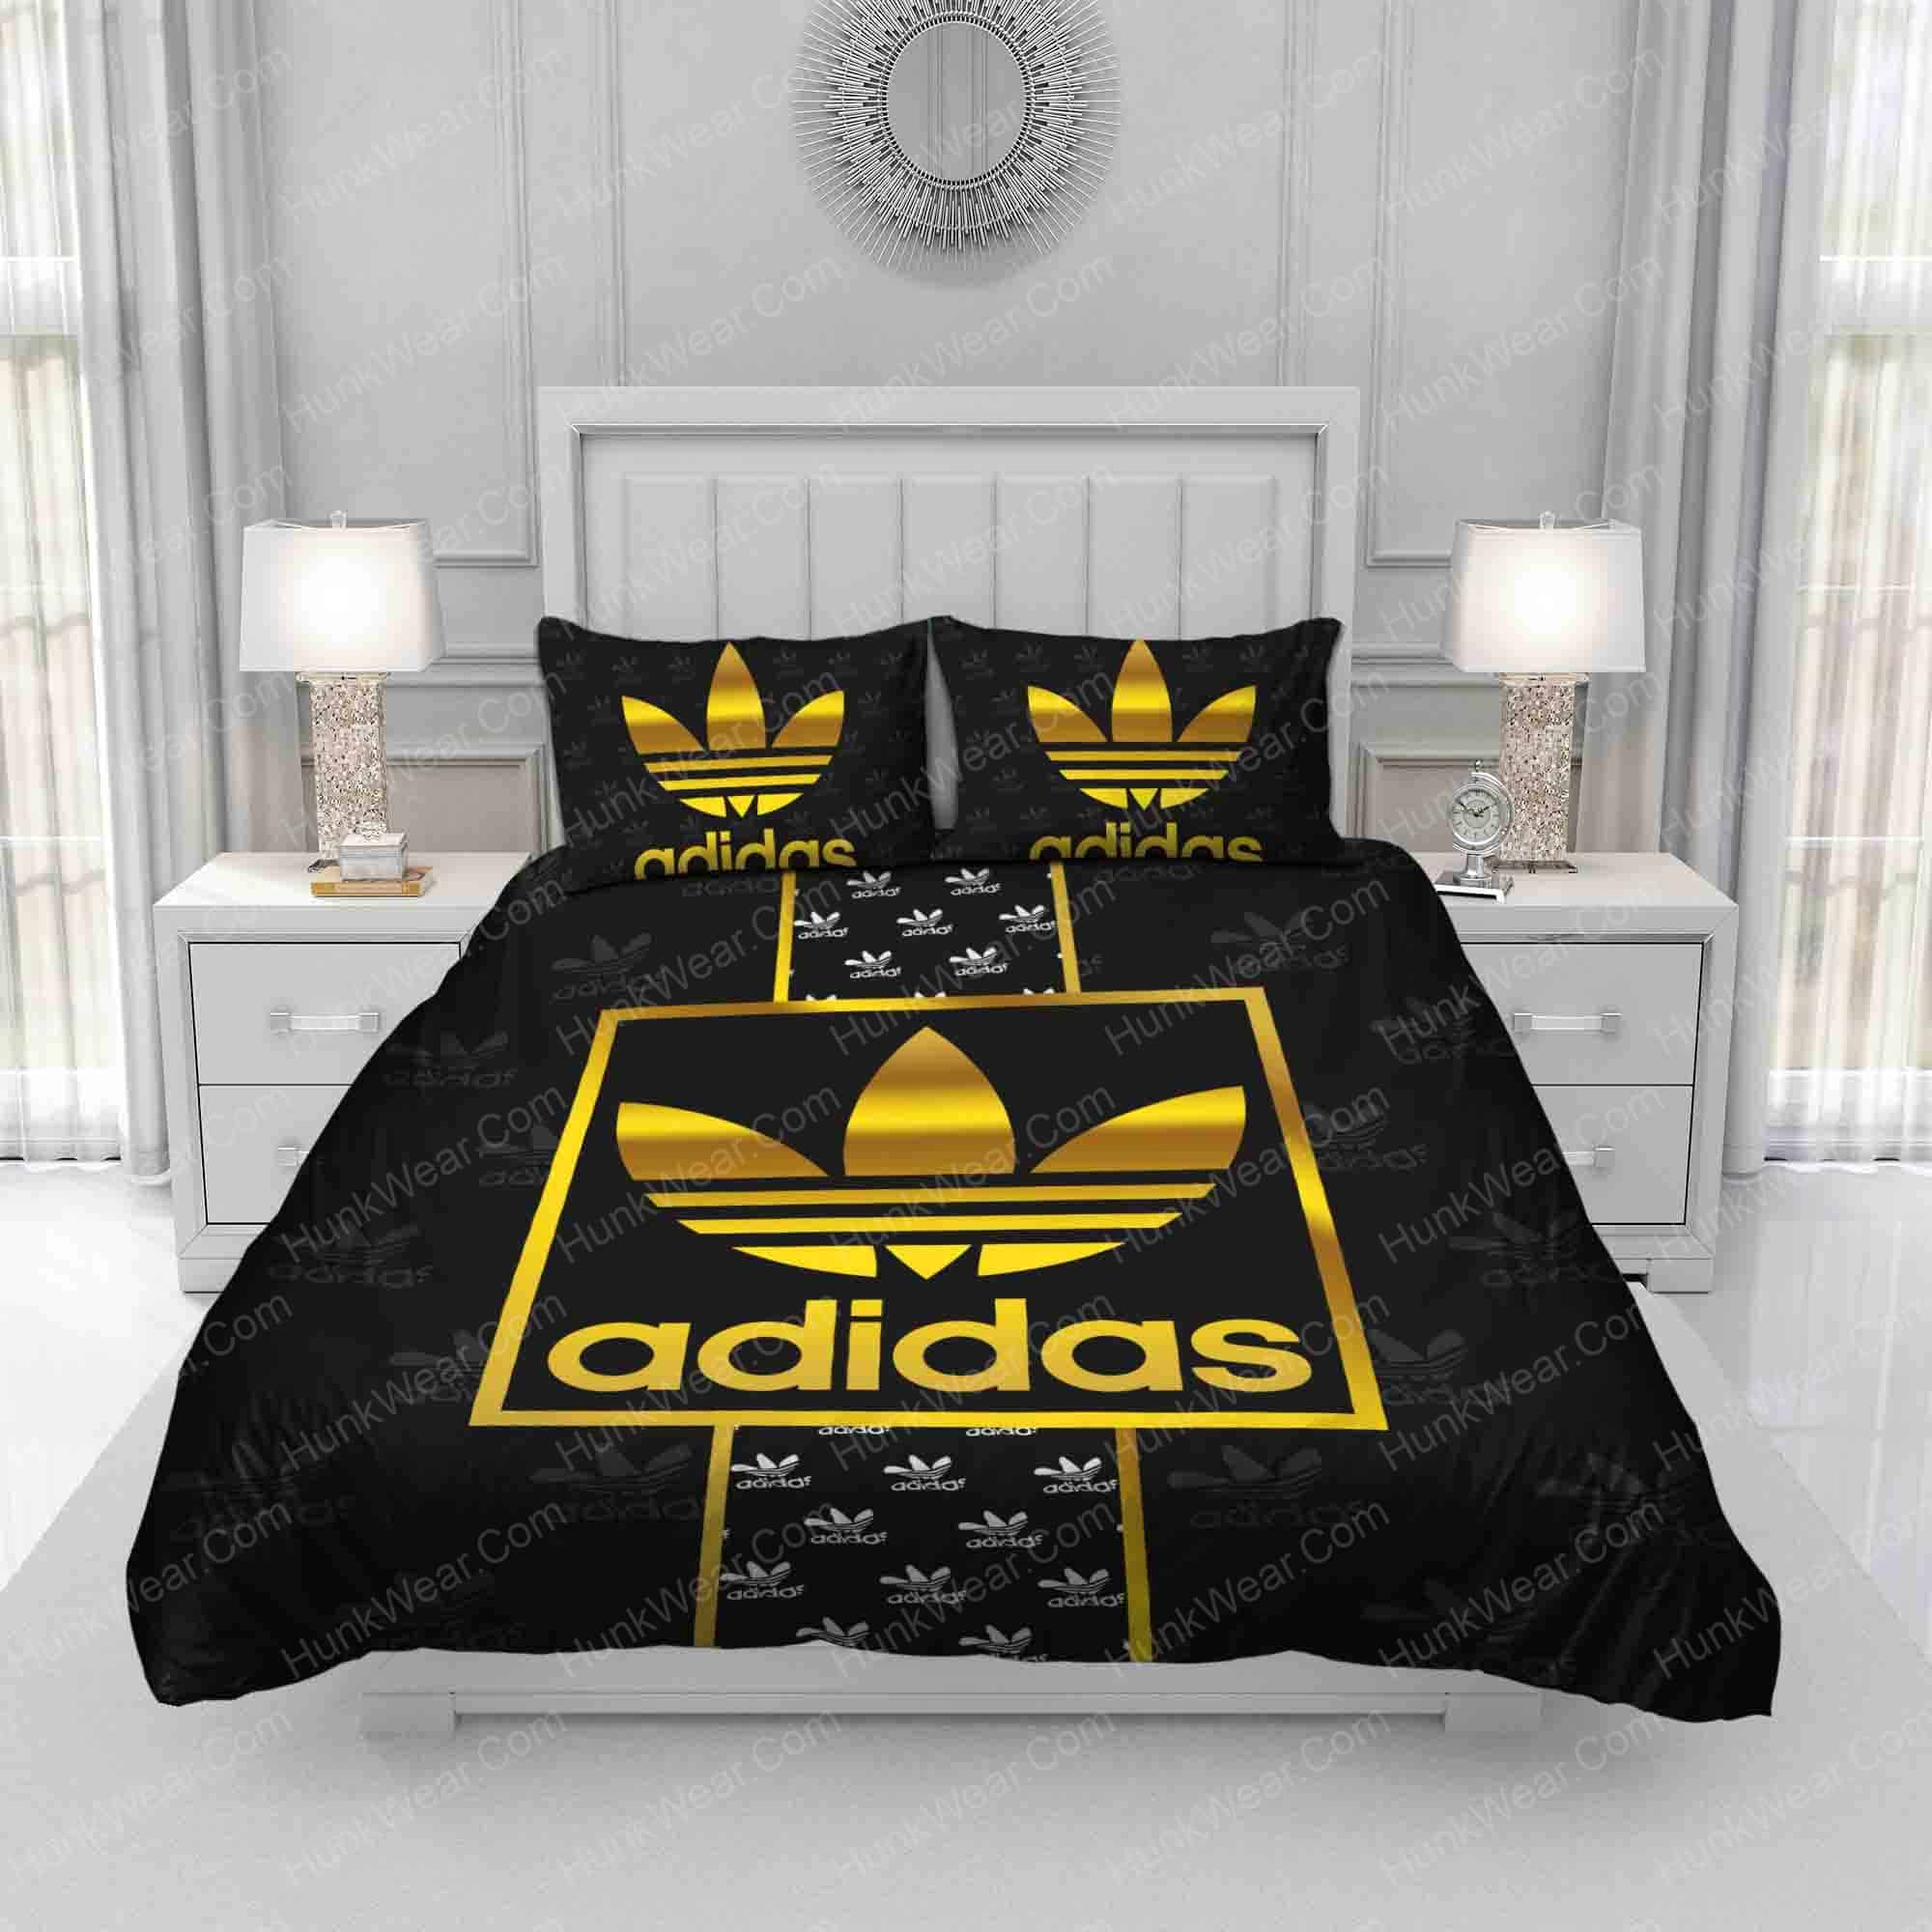 adidas gold logo bedding sets 2